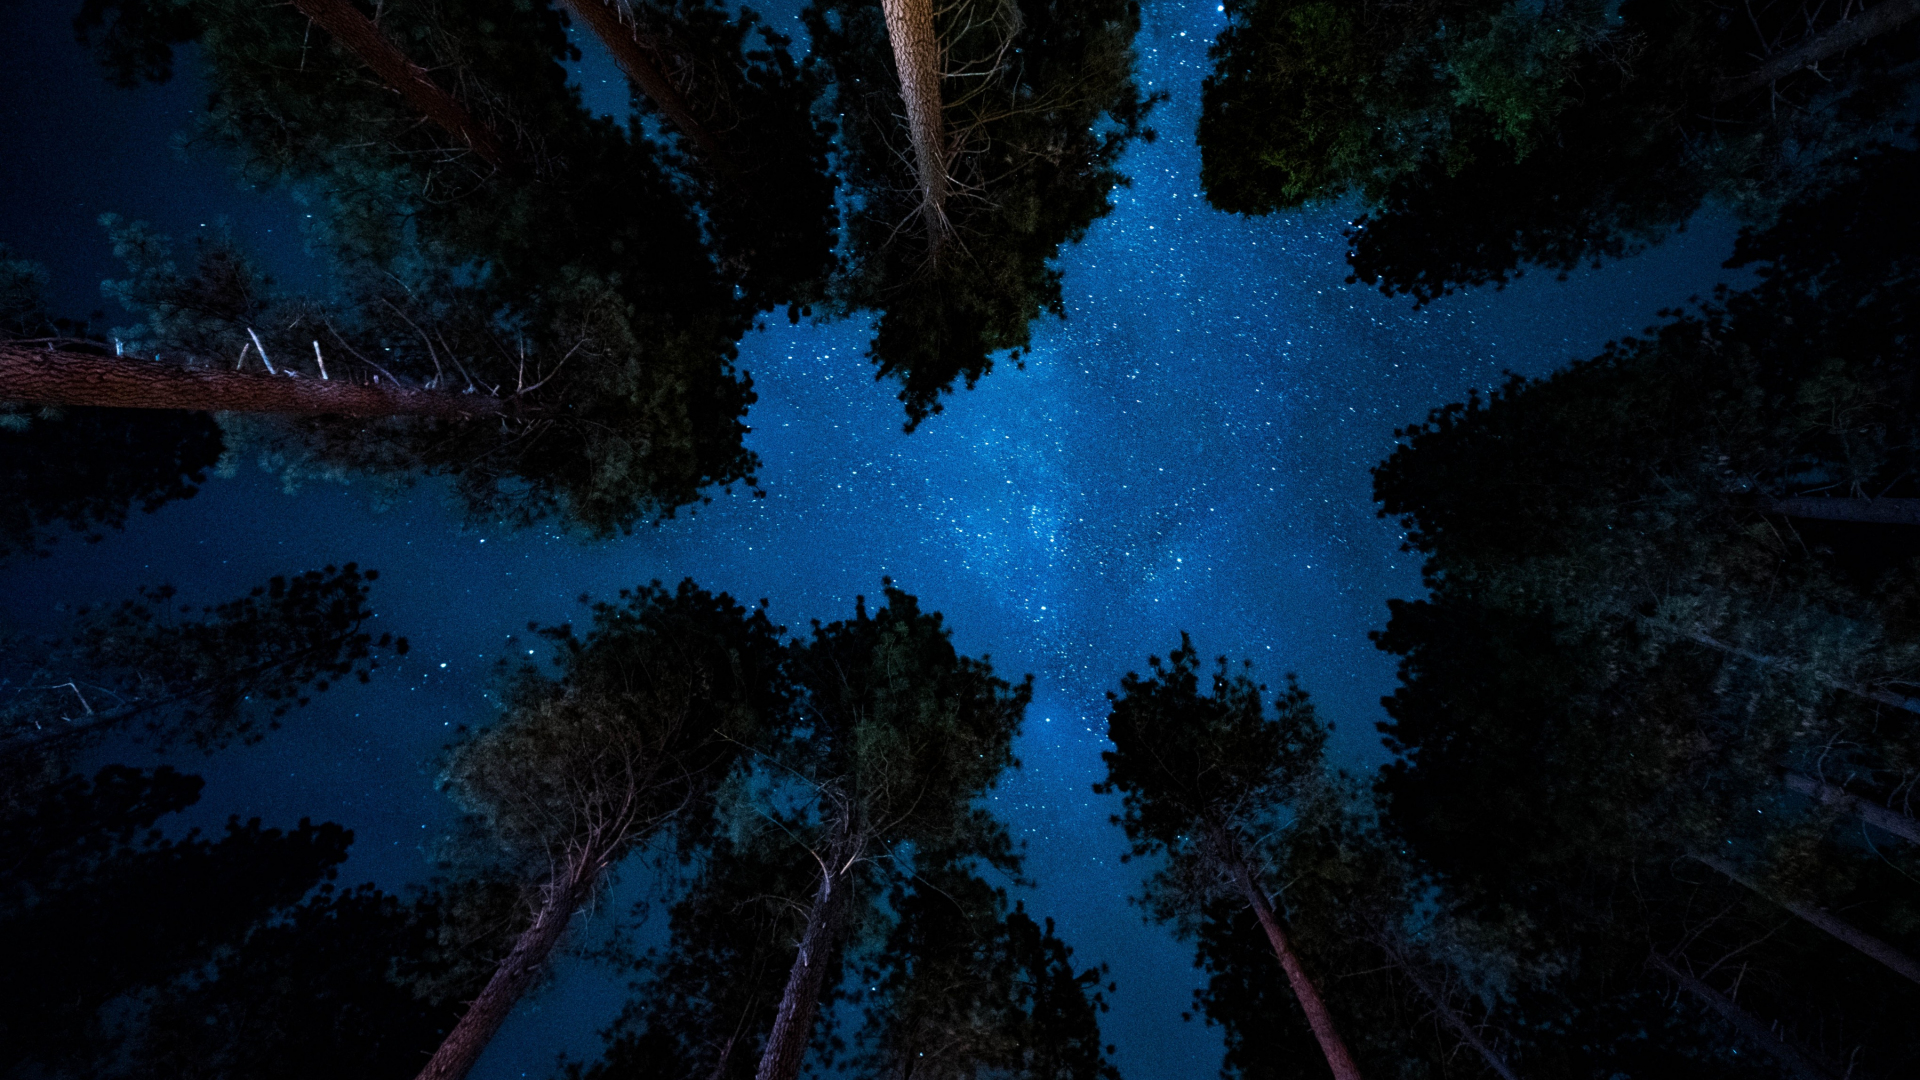 Download 1920x1080 Wallpaper Starry Night, Nature, Sky, Trees, 4k, Full